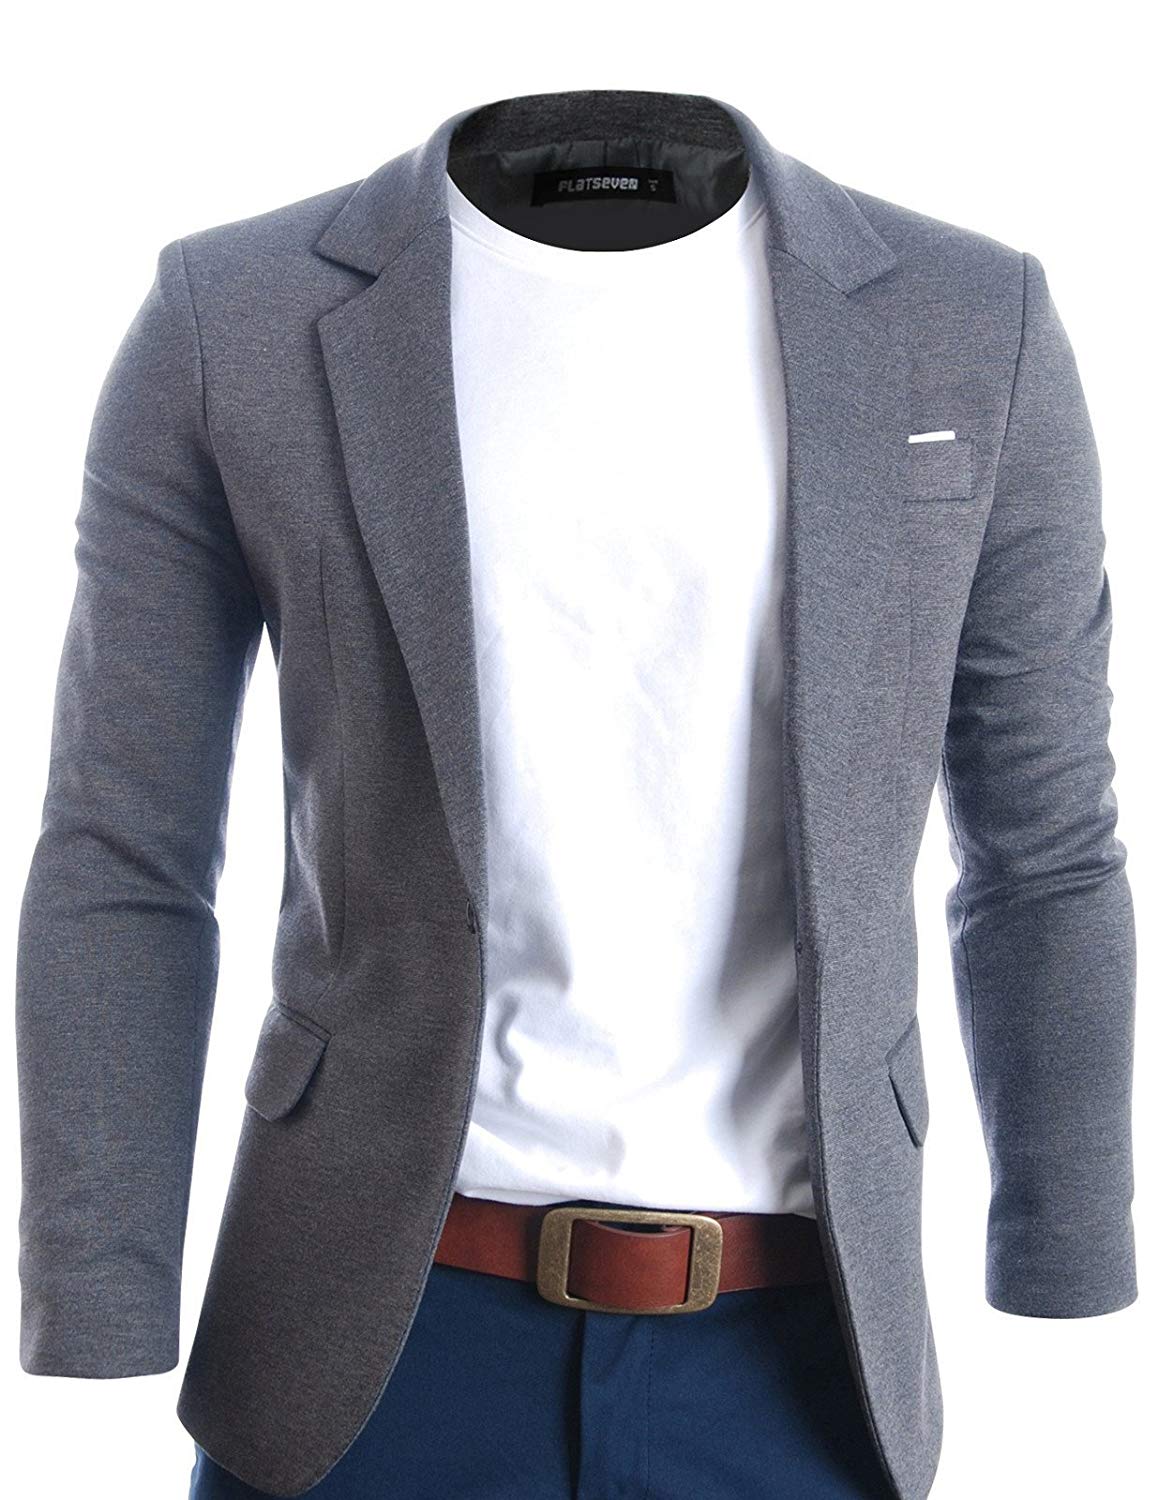 FLATSEVEN Mens Fit Casual Premium Blazer Jacket